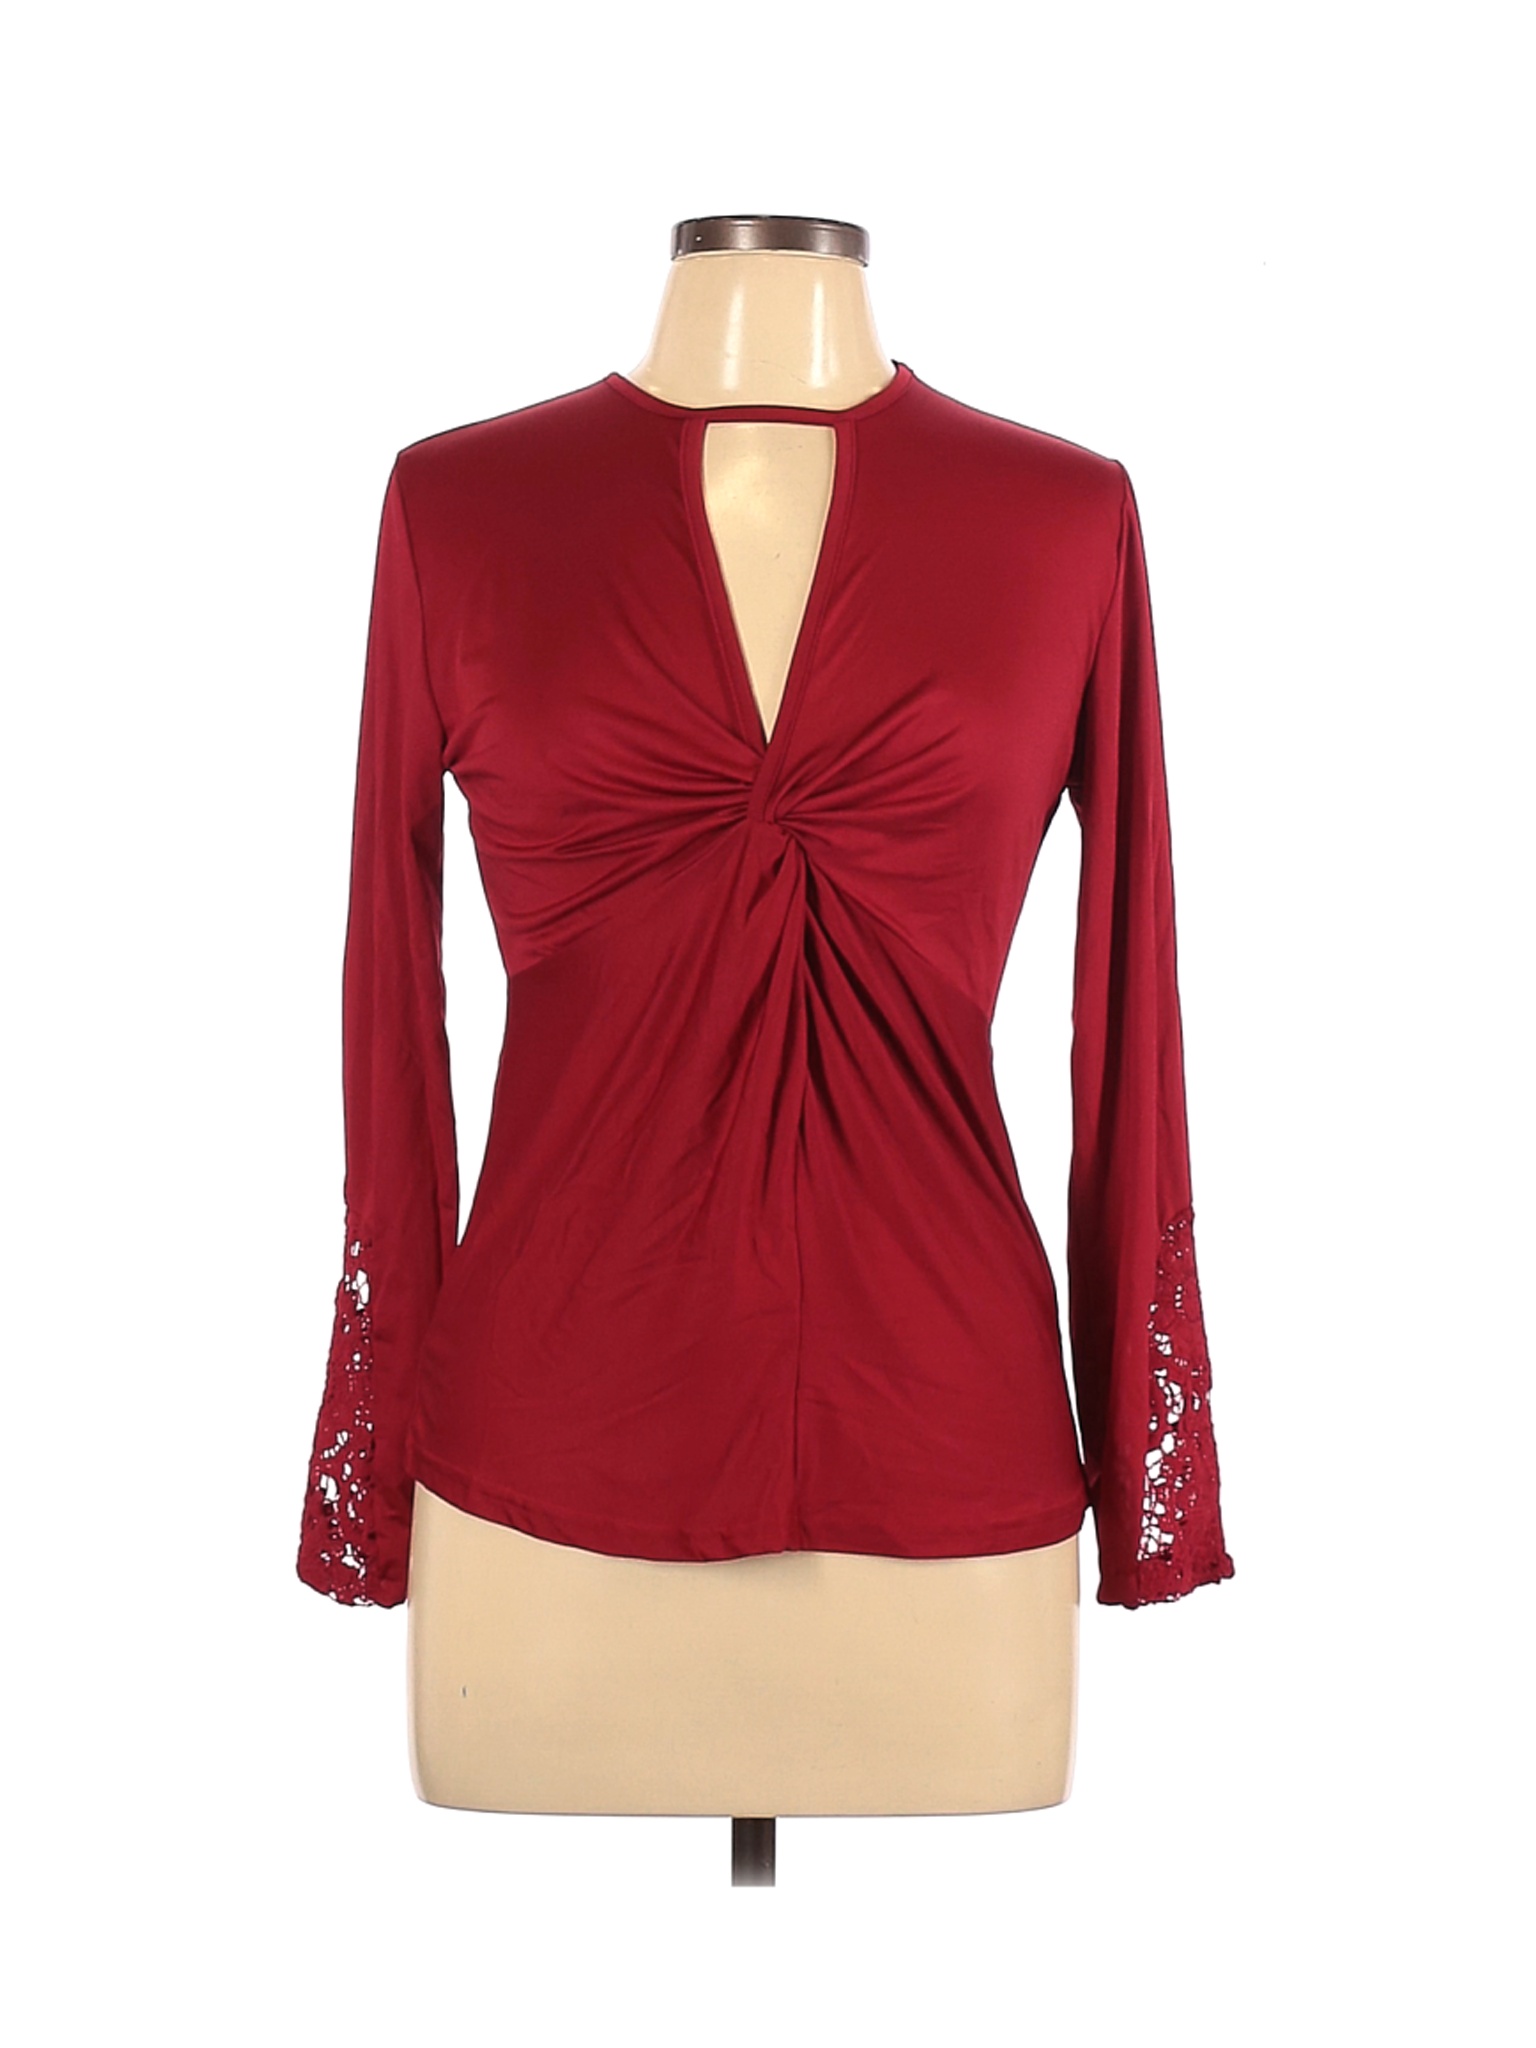 Unbranded Women Red Long Sleeve Top L | eBay